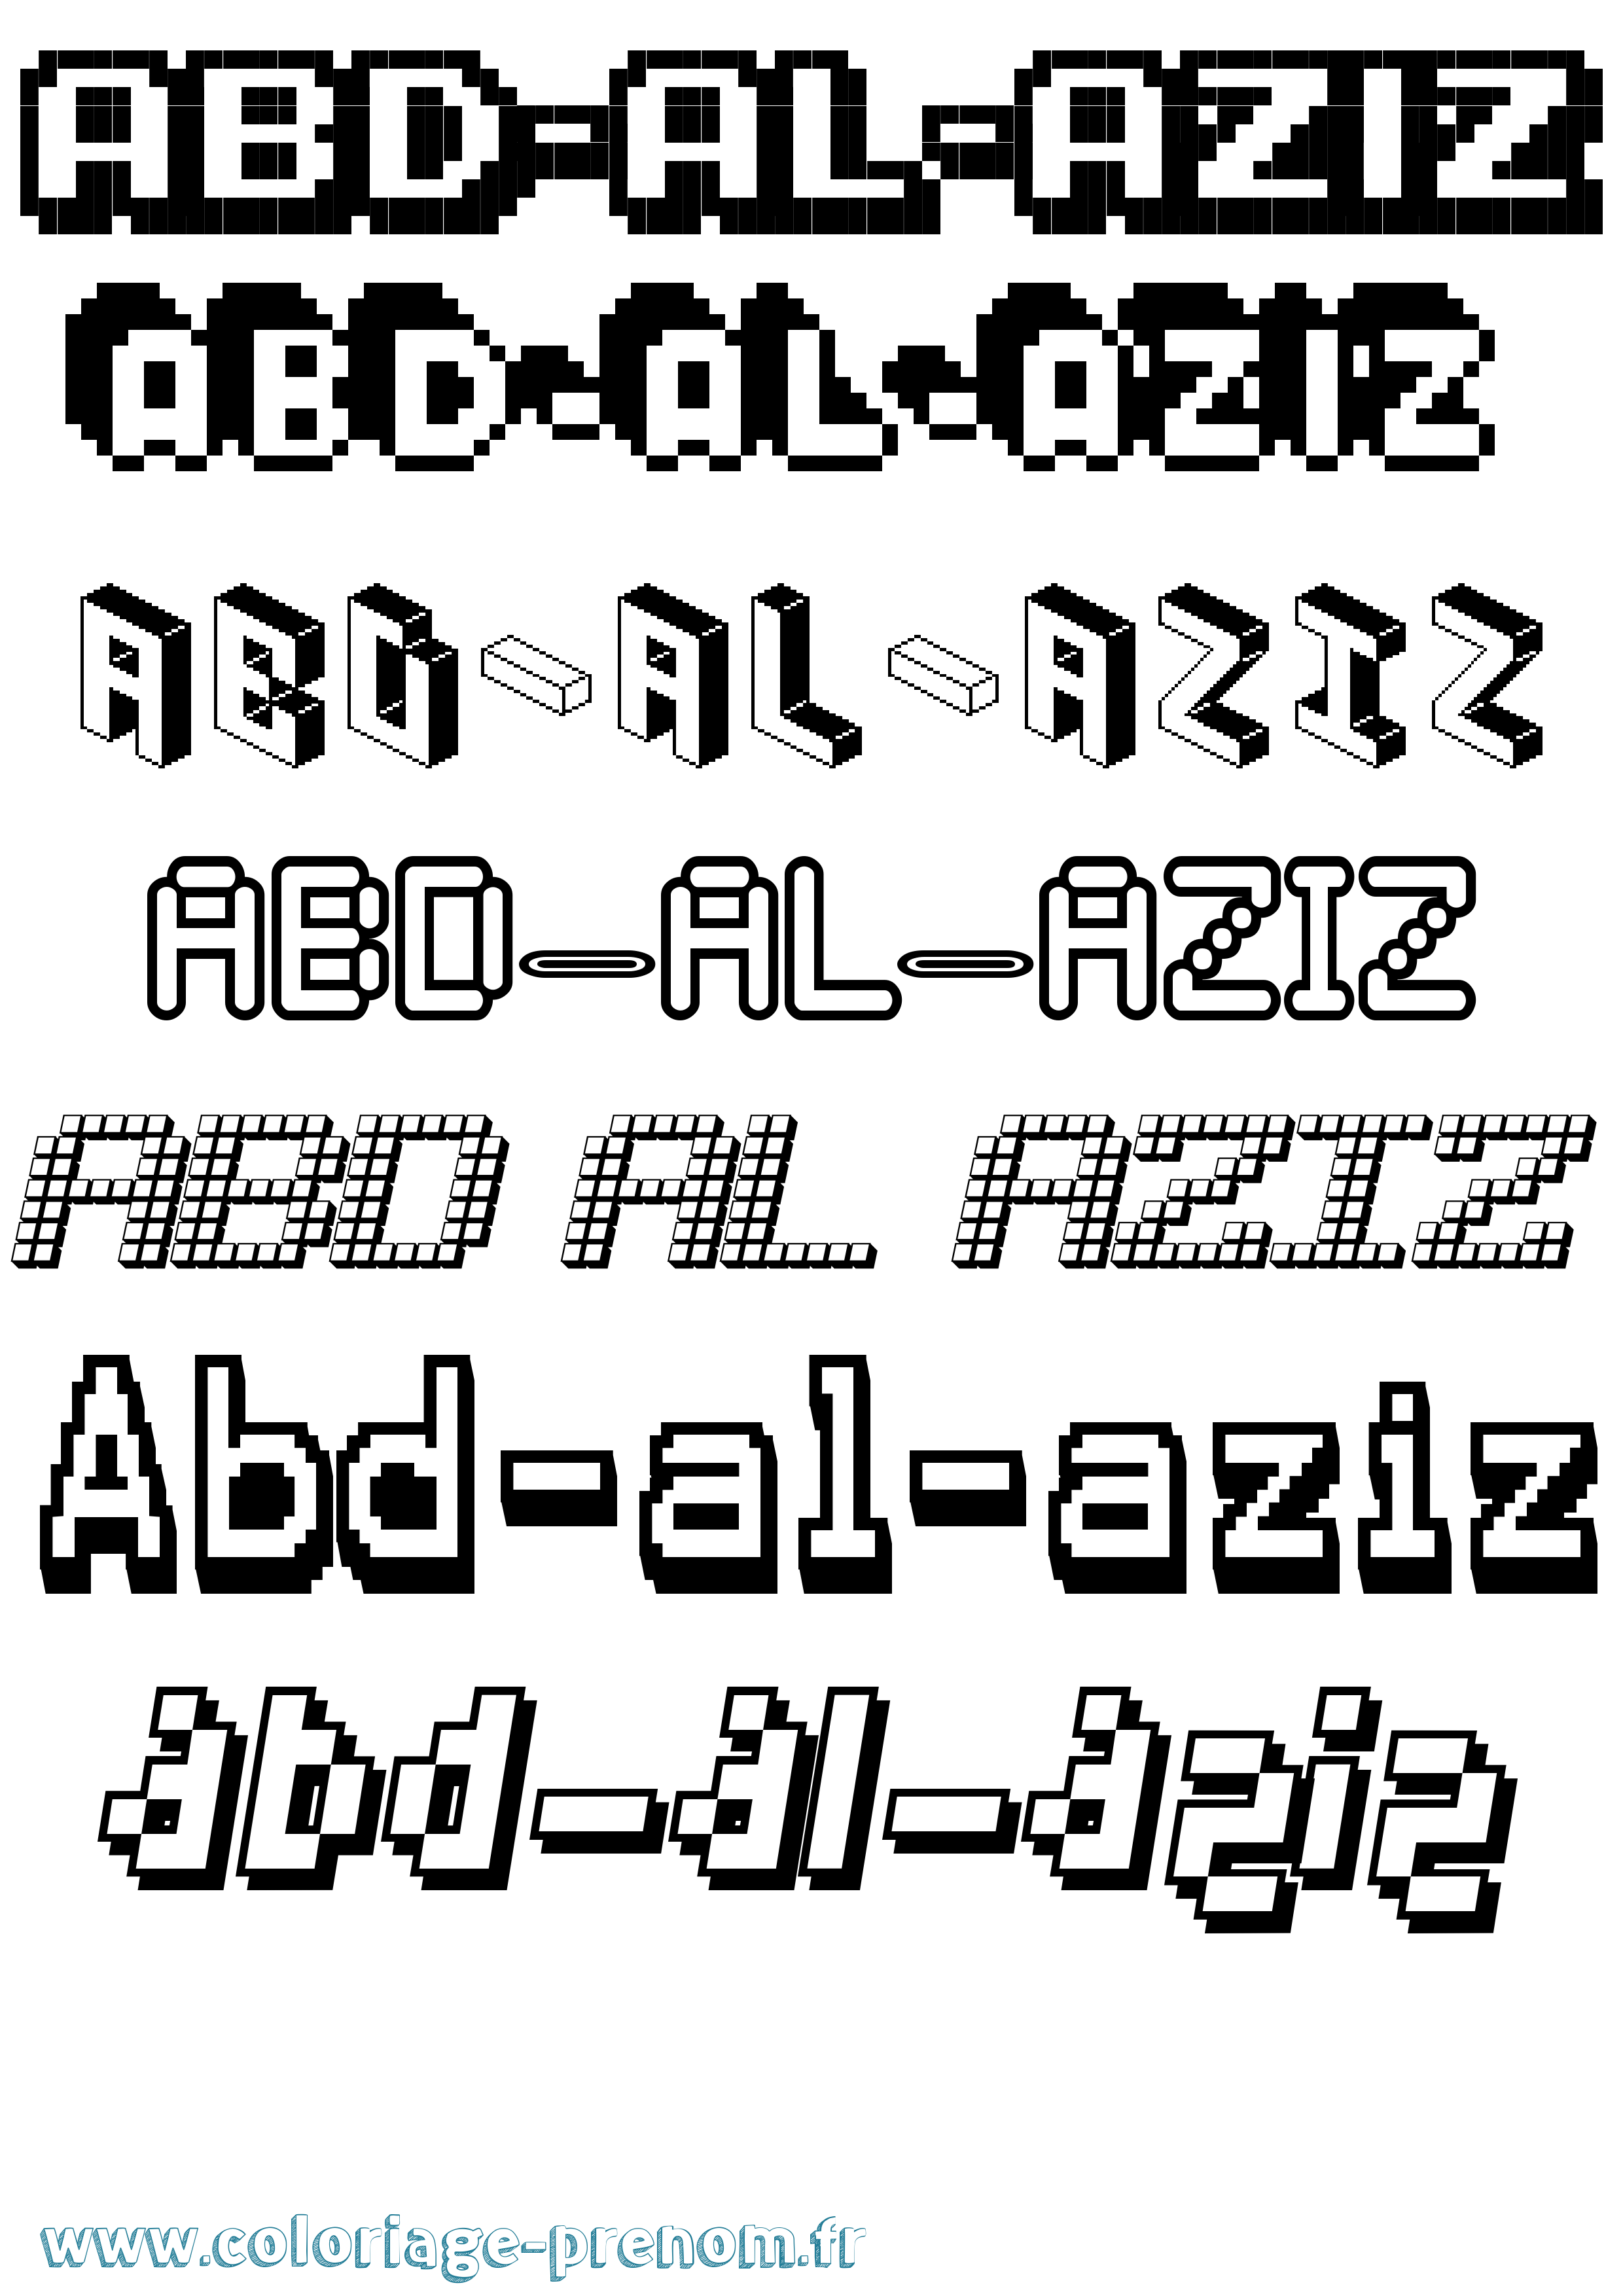 Coloriage prénom Abd-Al-Aziz Pixel